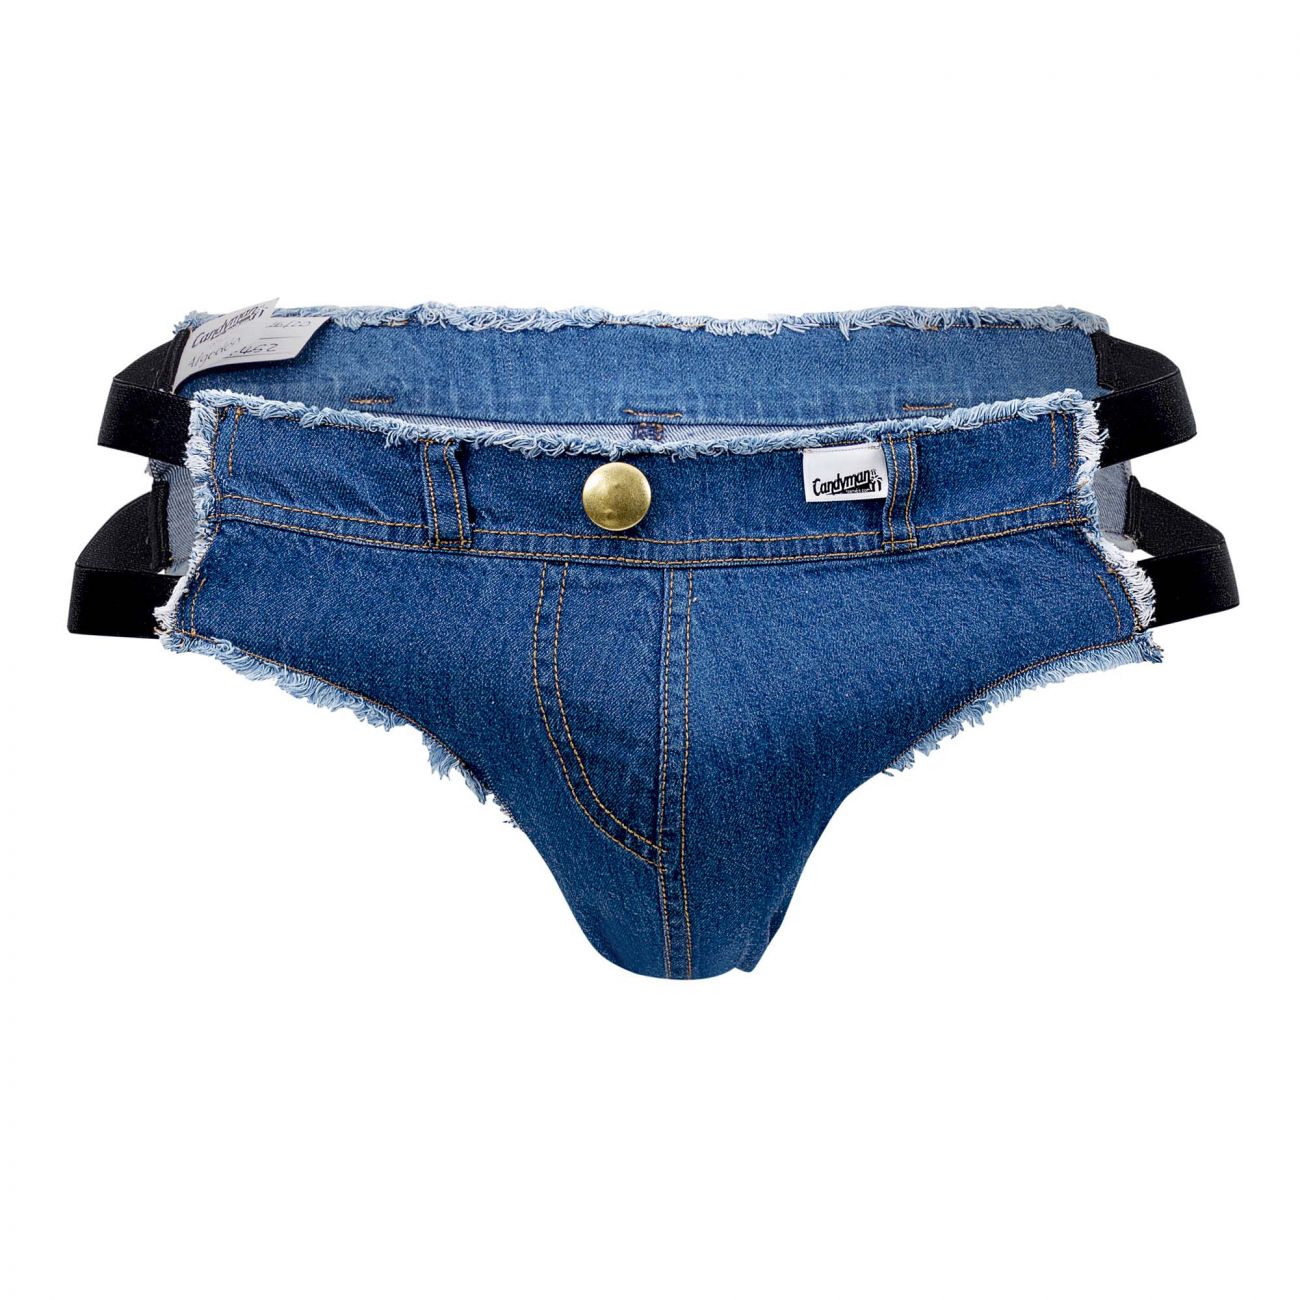 Mens Underwear Candyman 99452 American Jeans Thongs Ebay 